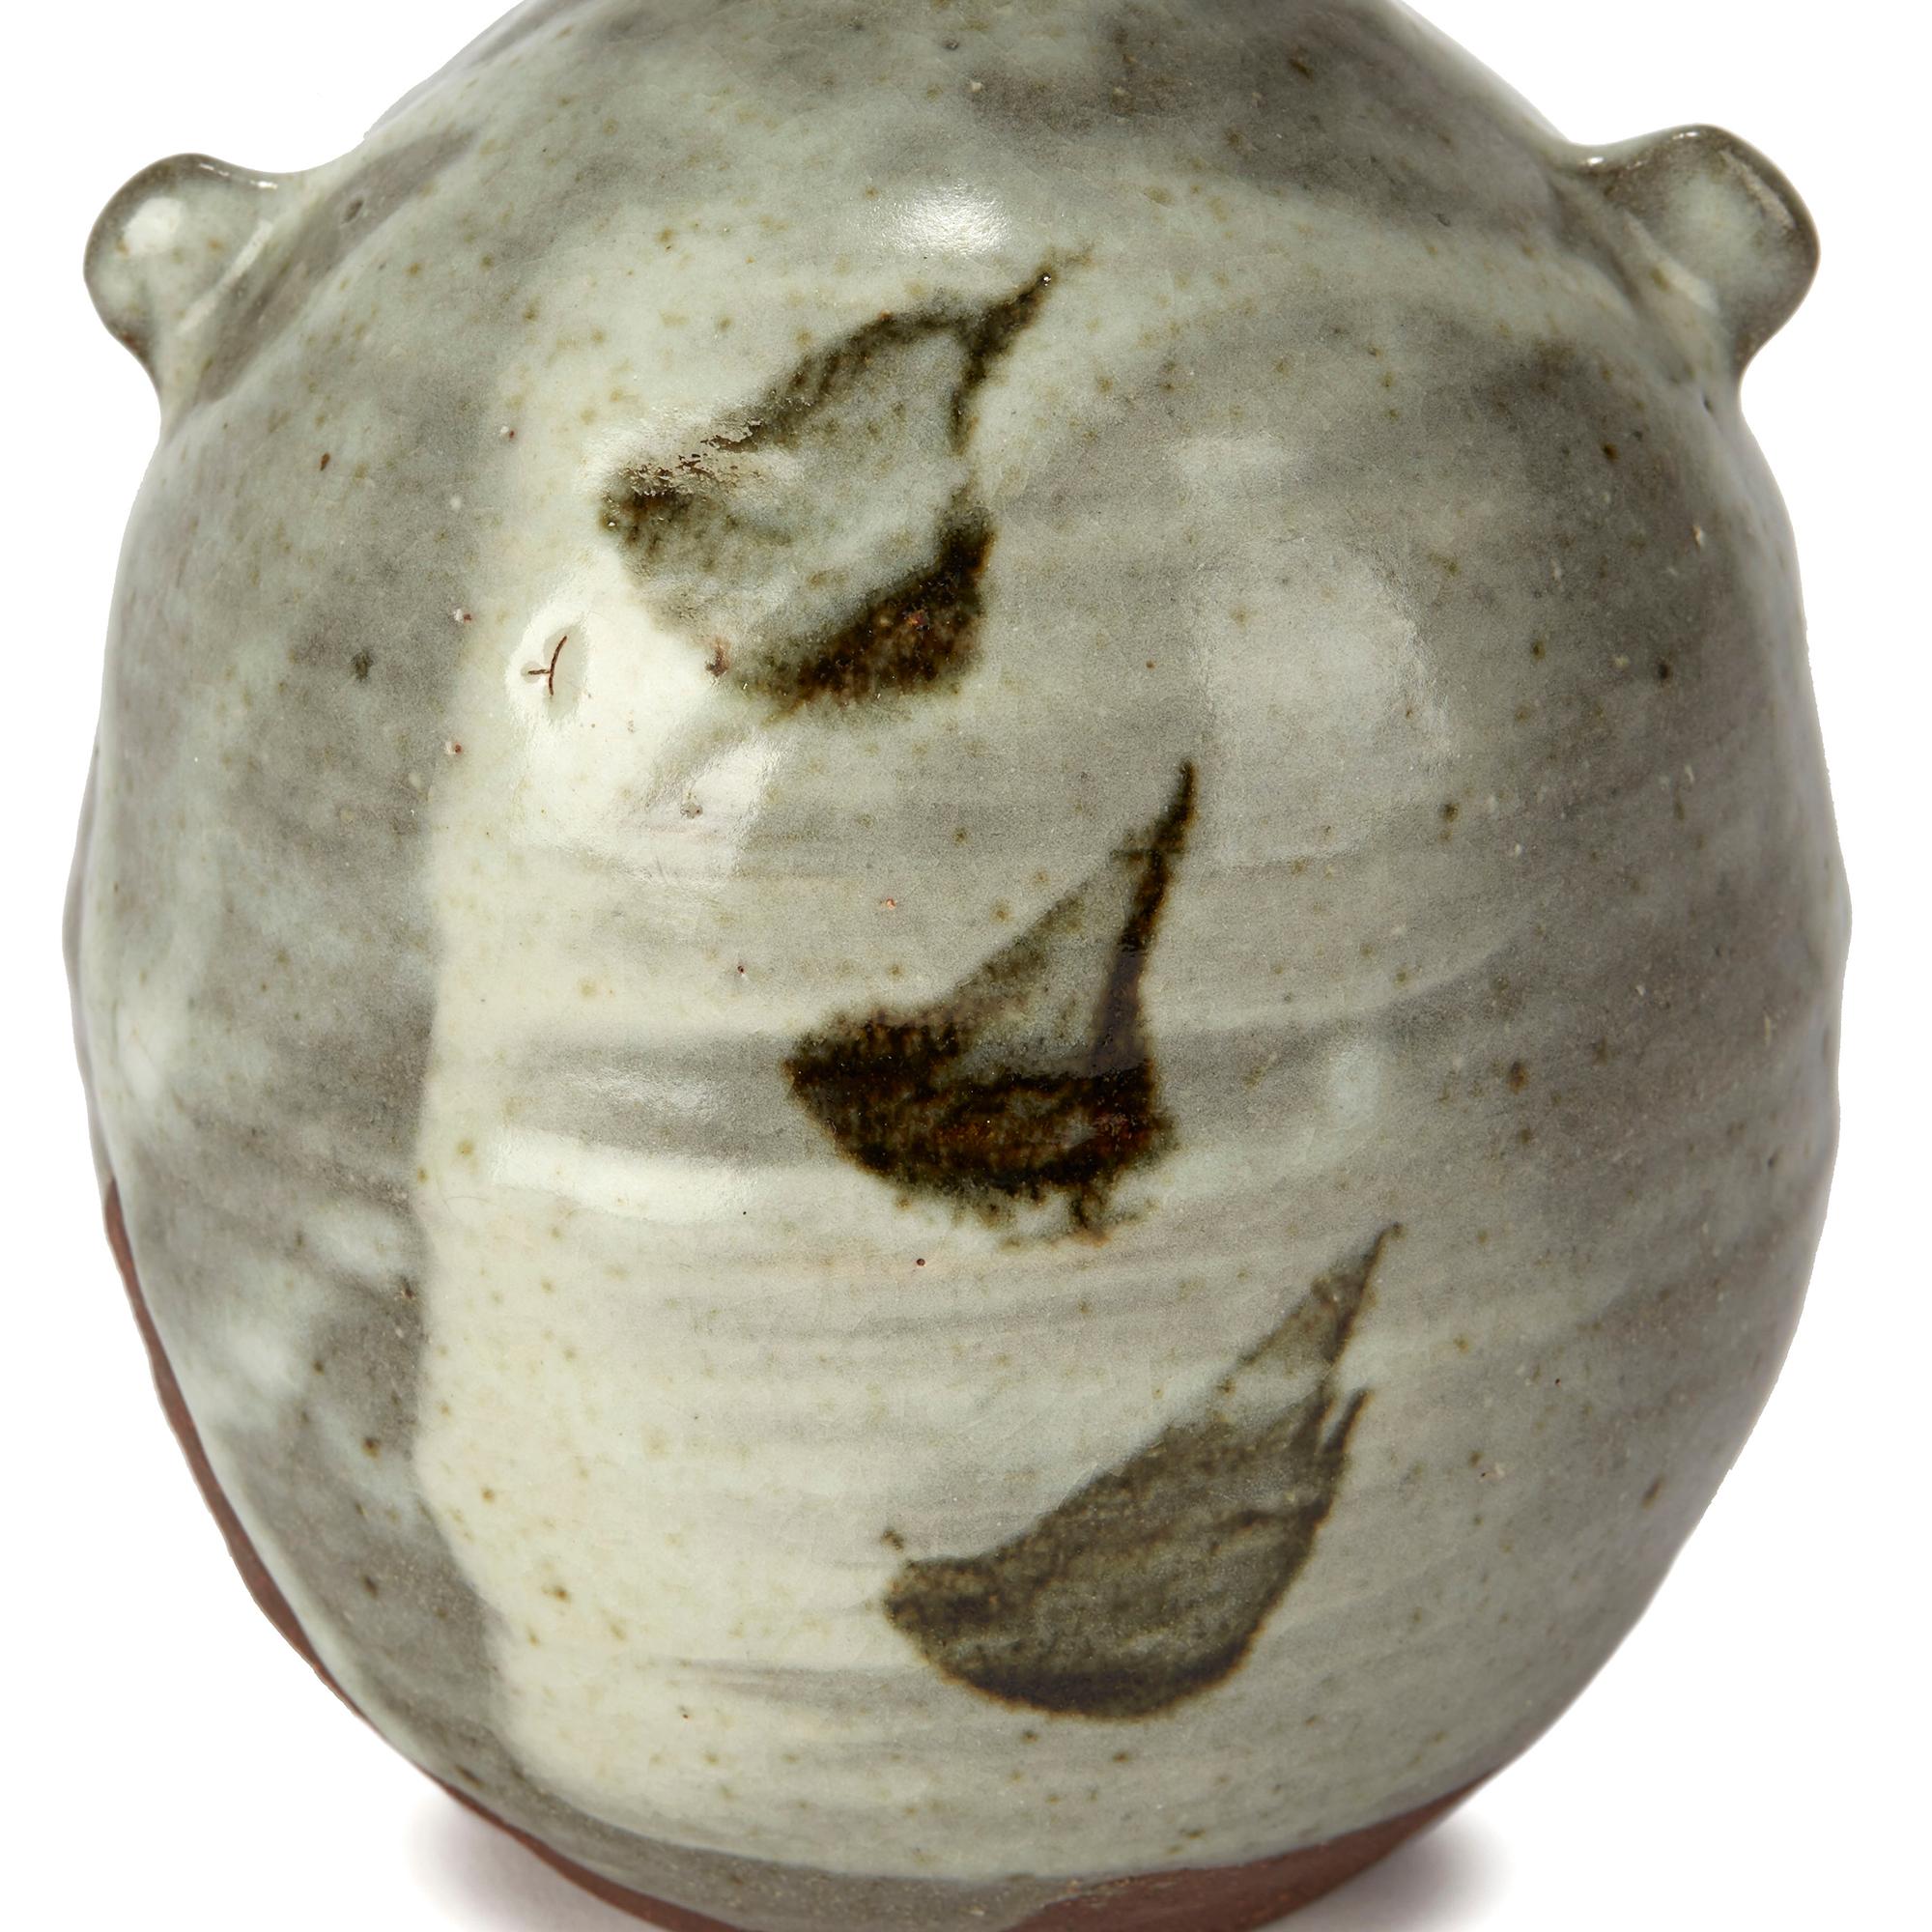 Janet Leach Grey and White Stoneware Studio Pottery Glazed Bottle Vase 2